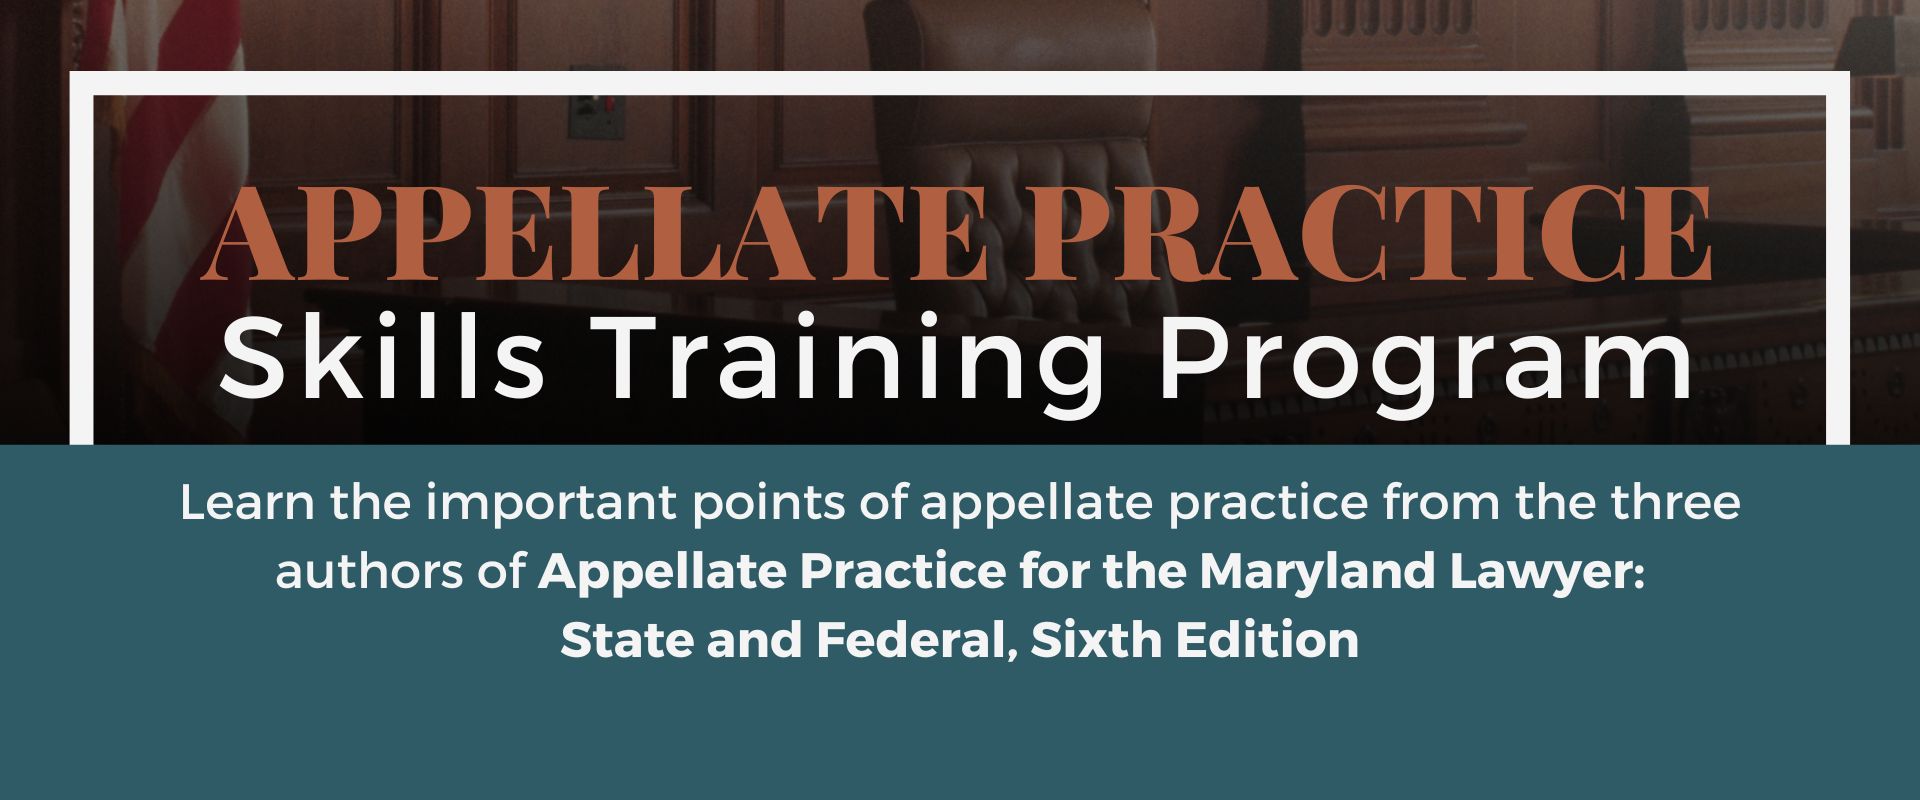 Appellate Practice Skills Training program